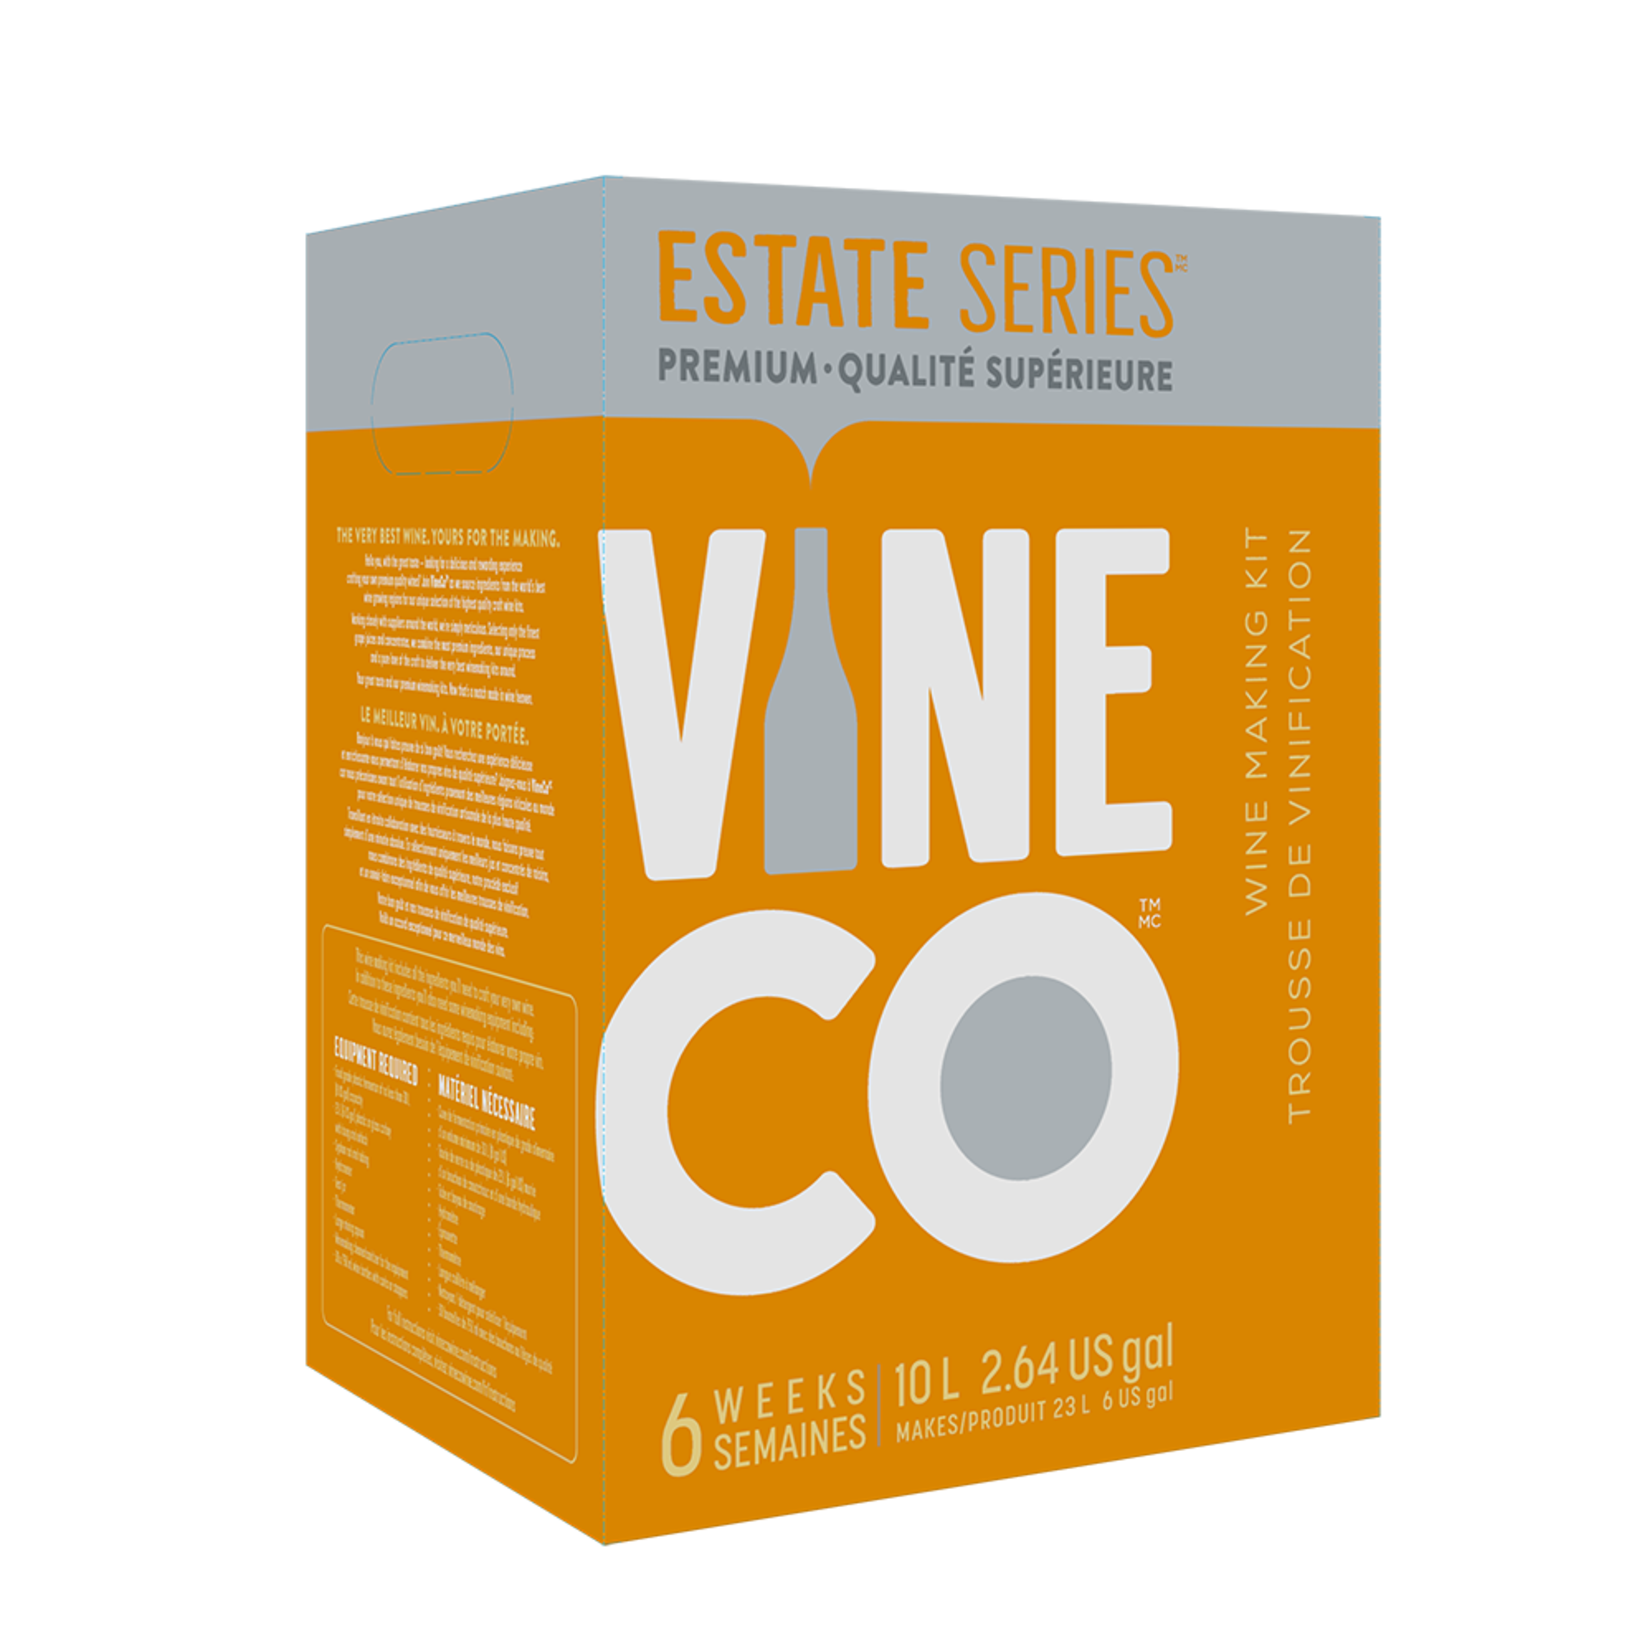 Vine Co. Estate Series Carmenere (Wine Kit), Chile